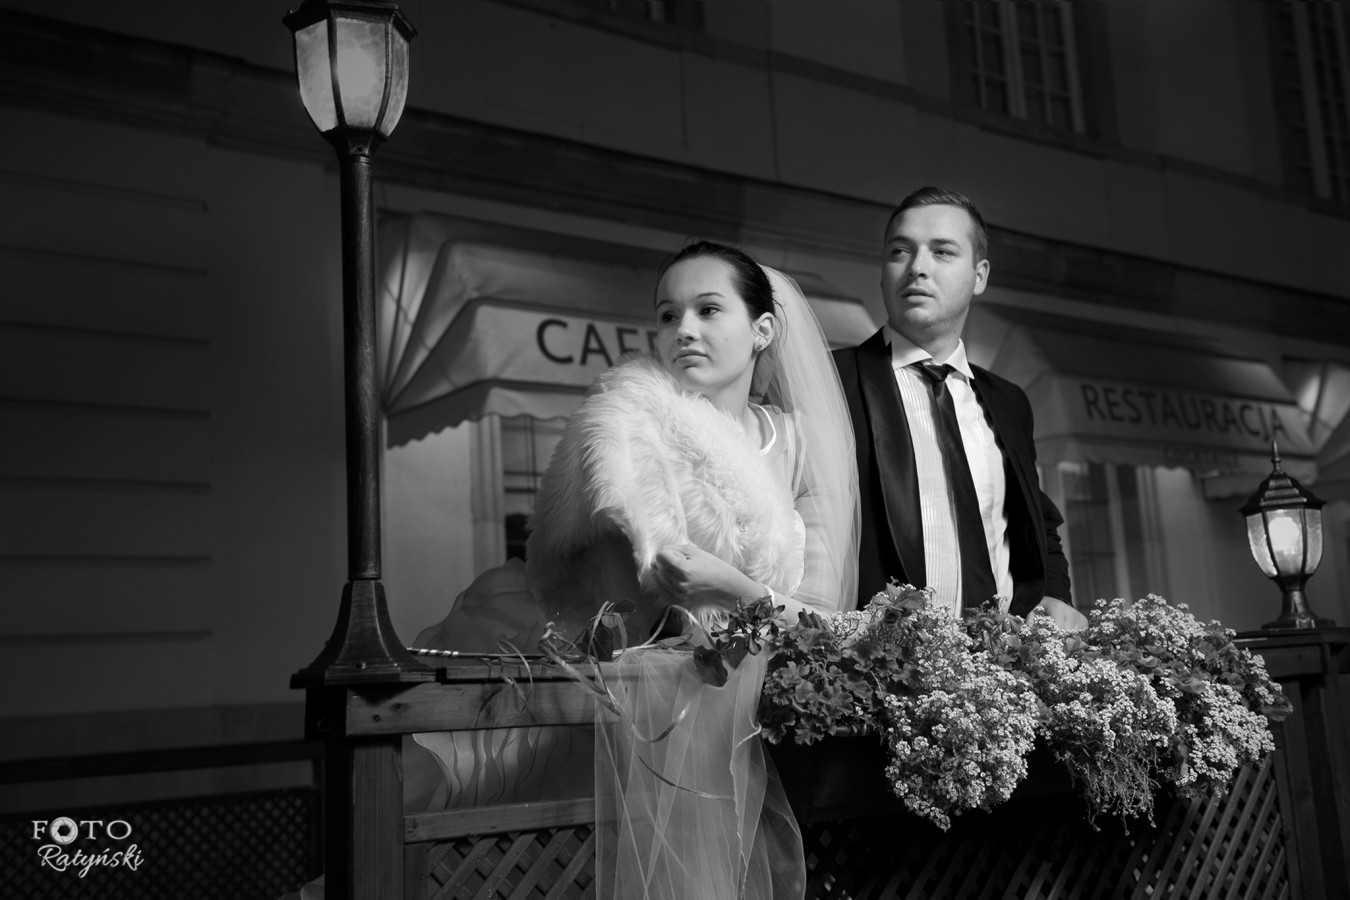 fotograf warszawa foto-ratynski portfolio zdjecia slubne inspiracje wesele plener slubny sesja slubna